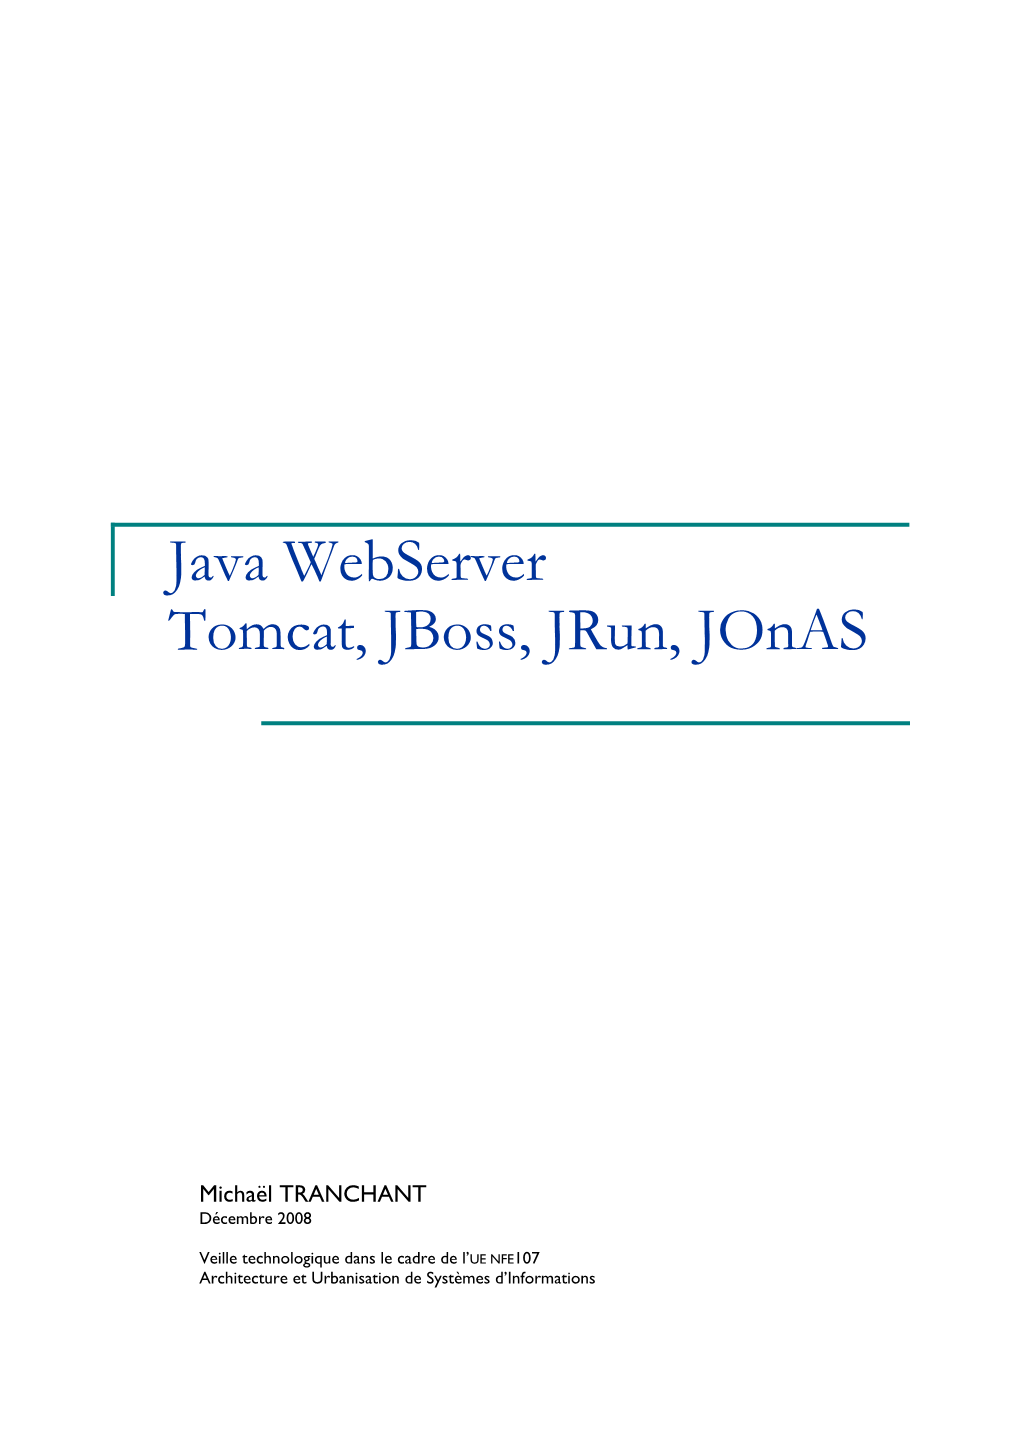 Java Webserver Tomcat, Jboss, Jrun, Jonas